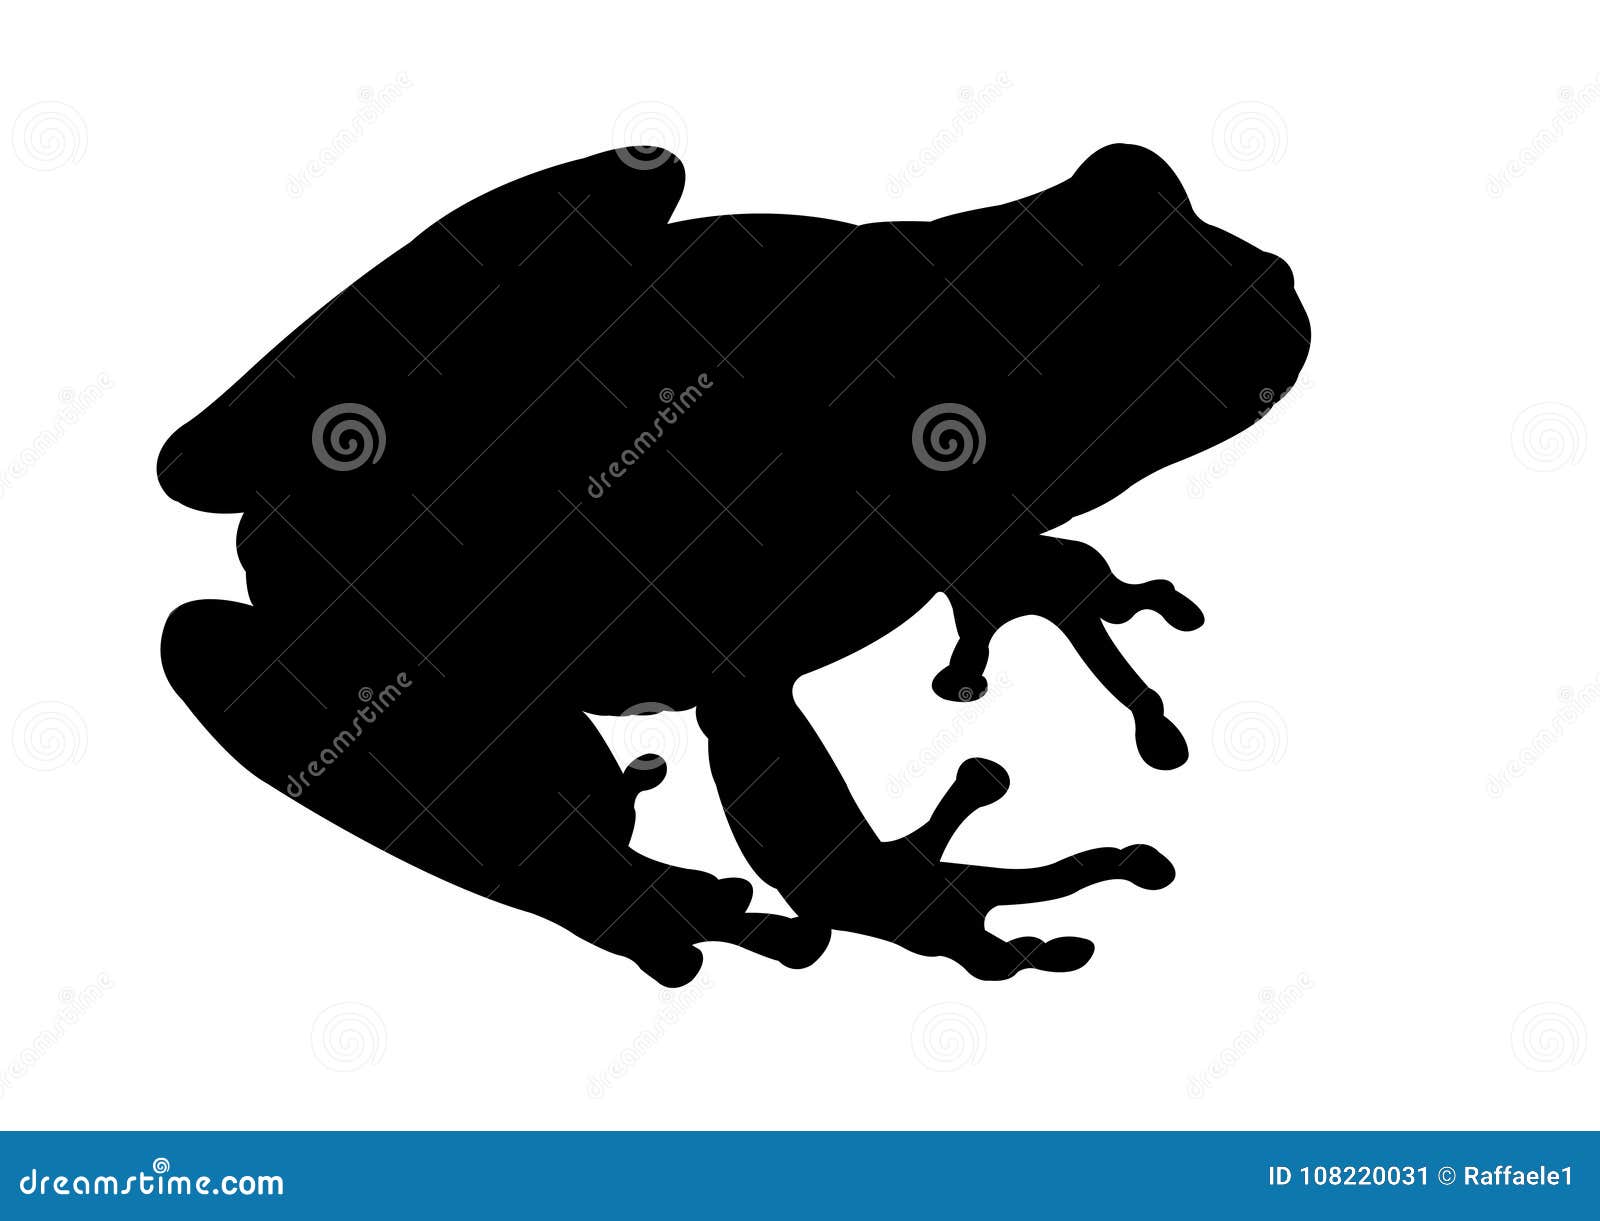 frog black silhouette